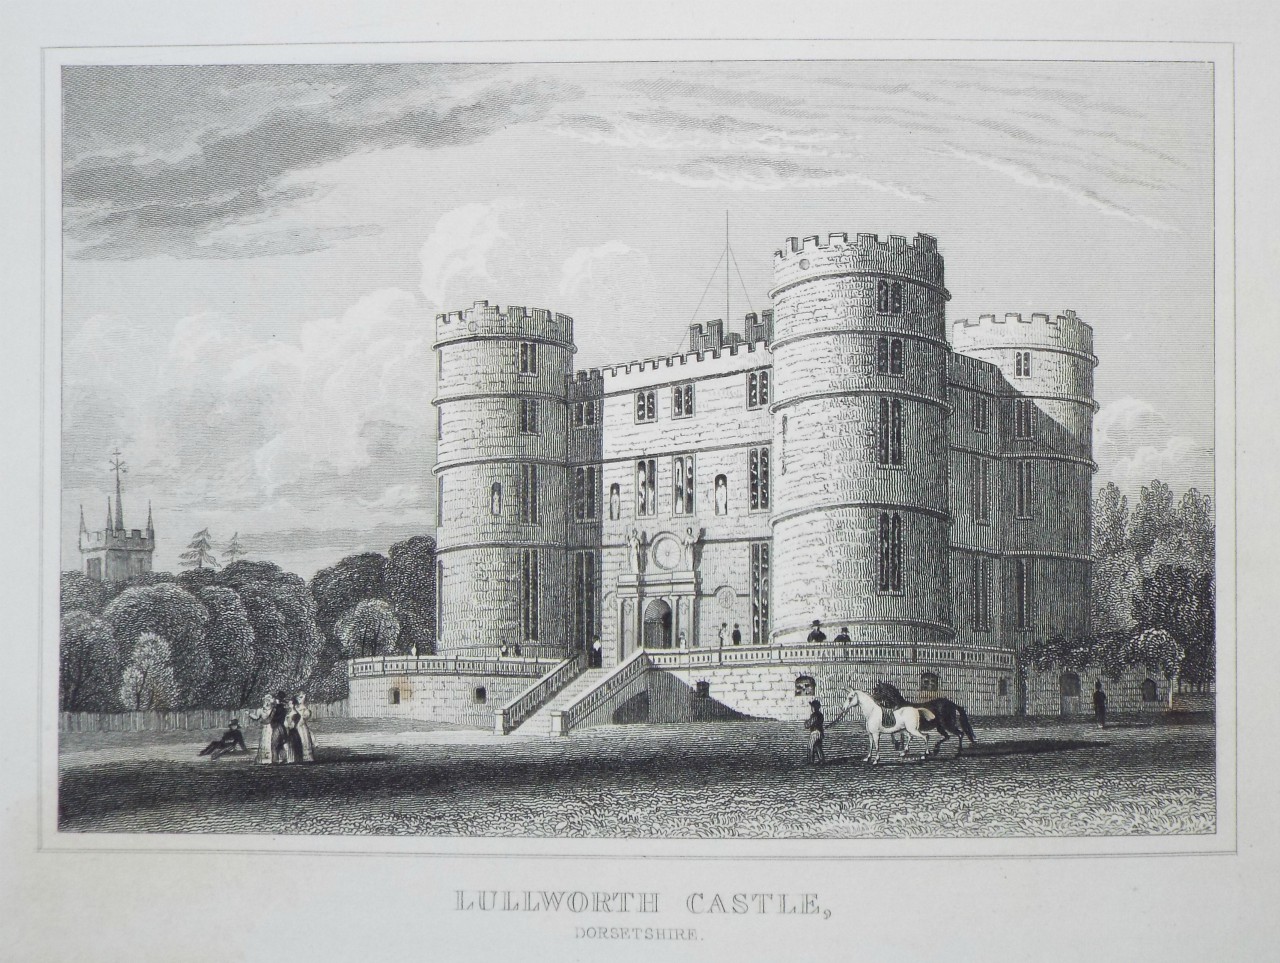 Print - Lullworth Castle. Dorsetshire. - Allen